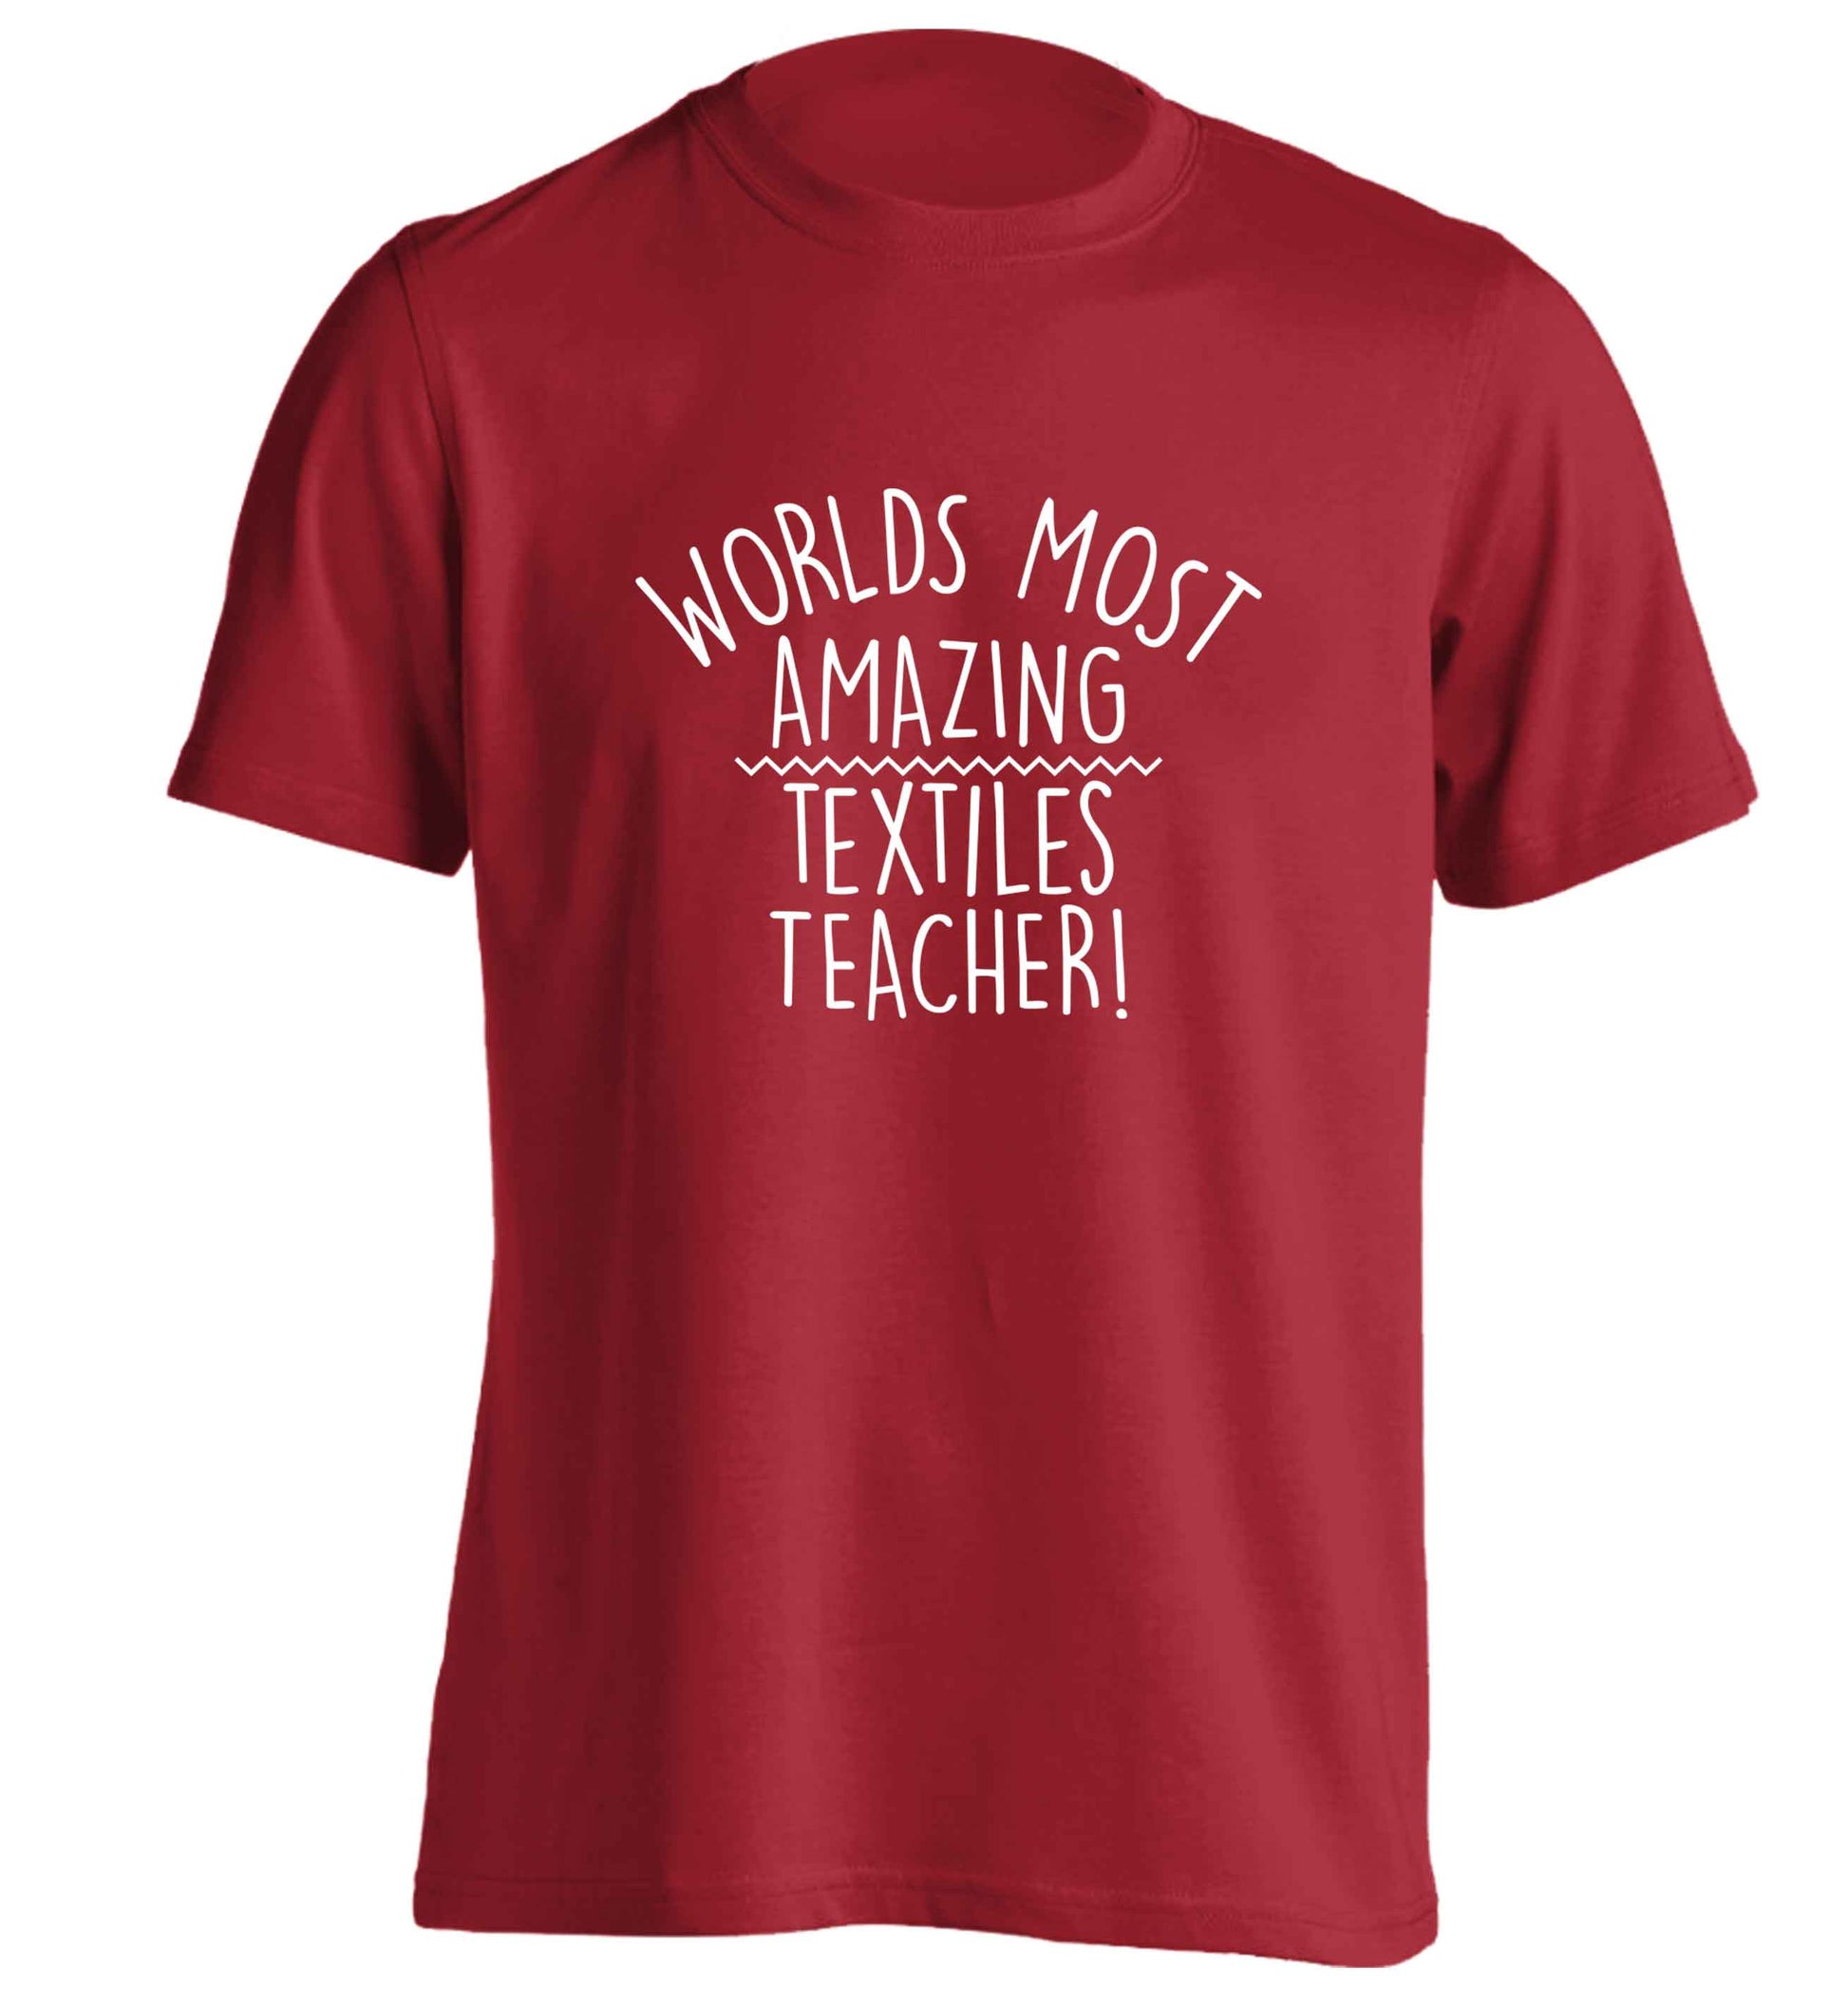 Worlds most amazing textiles teacher adults unisex red Tshirt 2XL